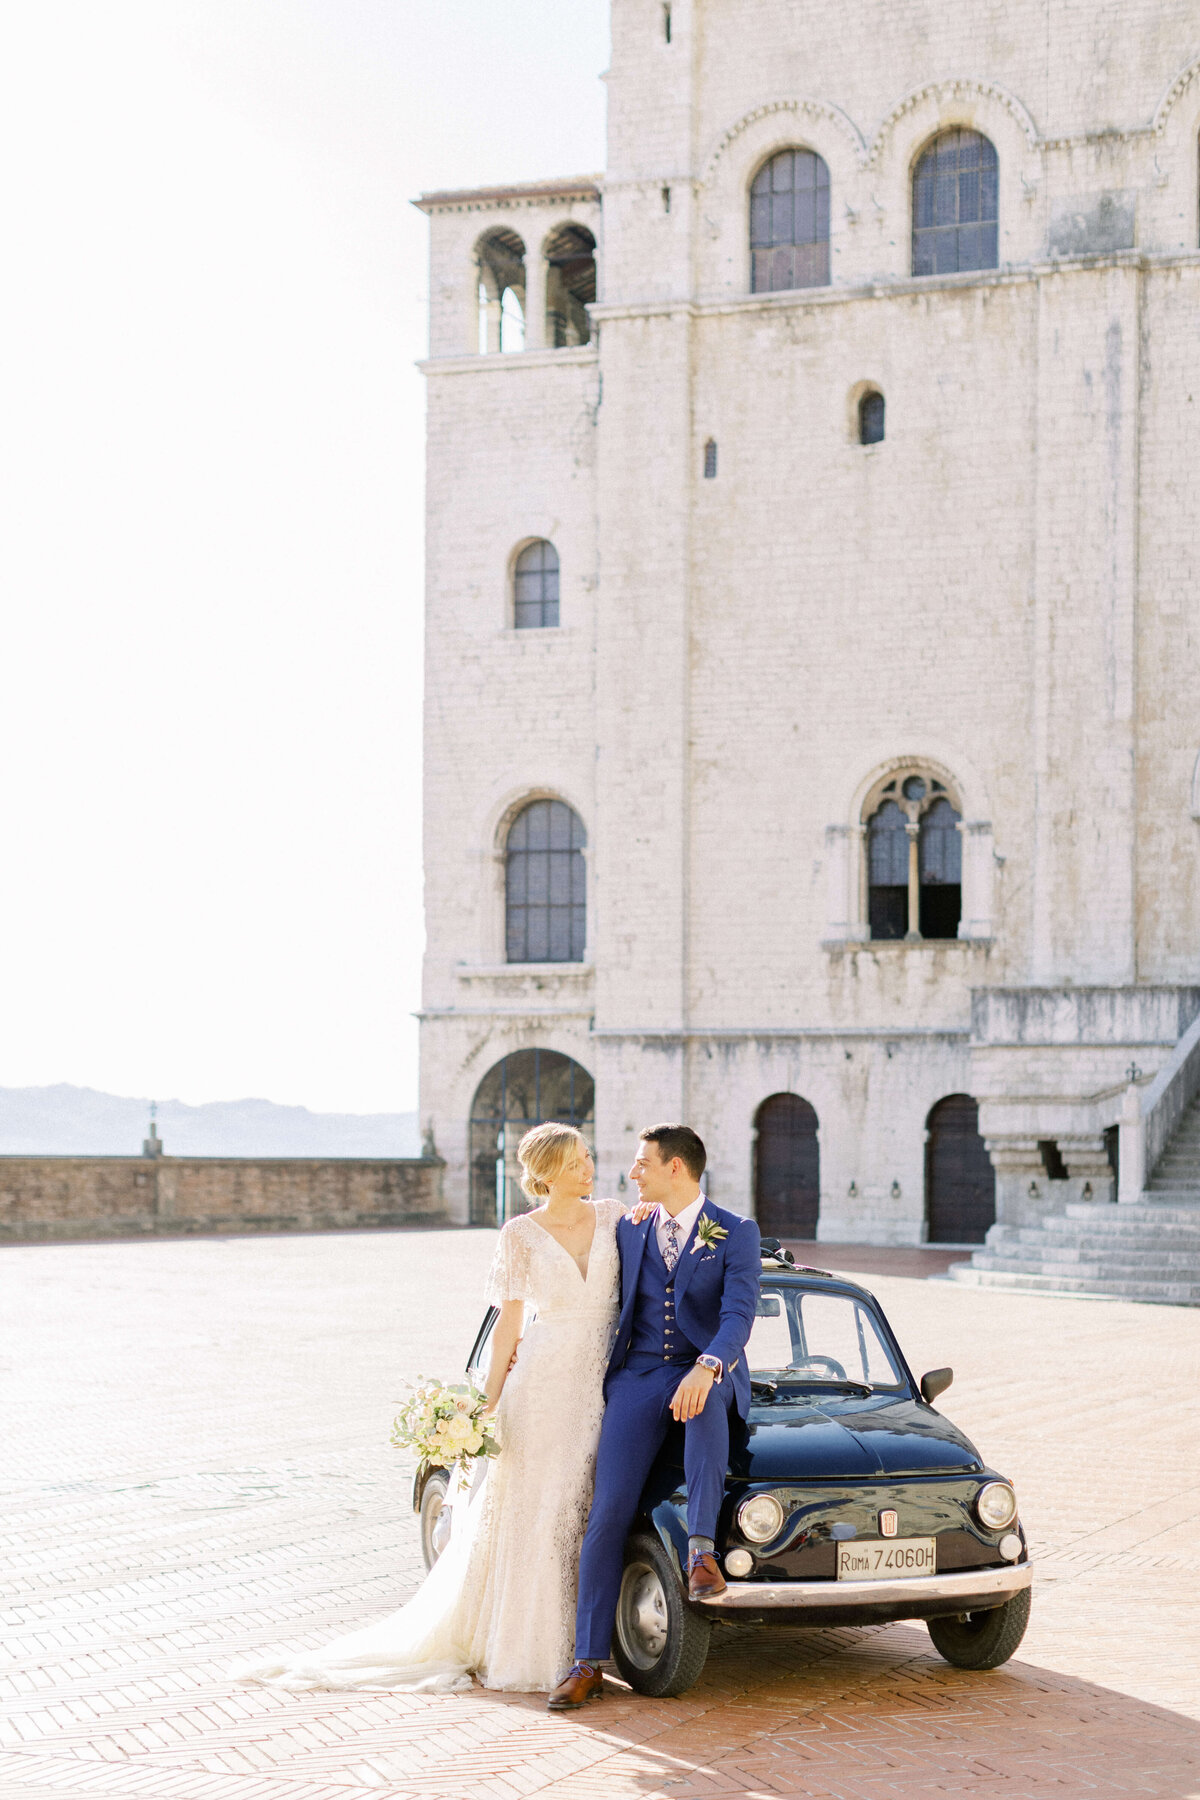 Wedding C&B - Umbria - Italy 2019 21